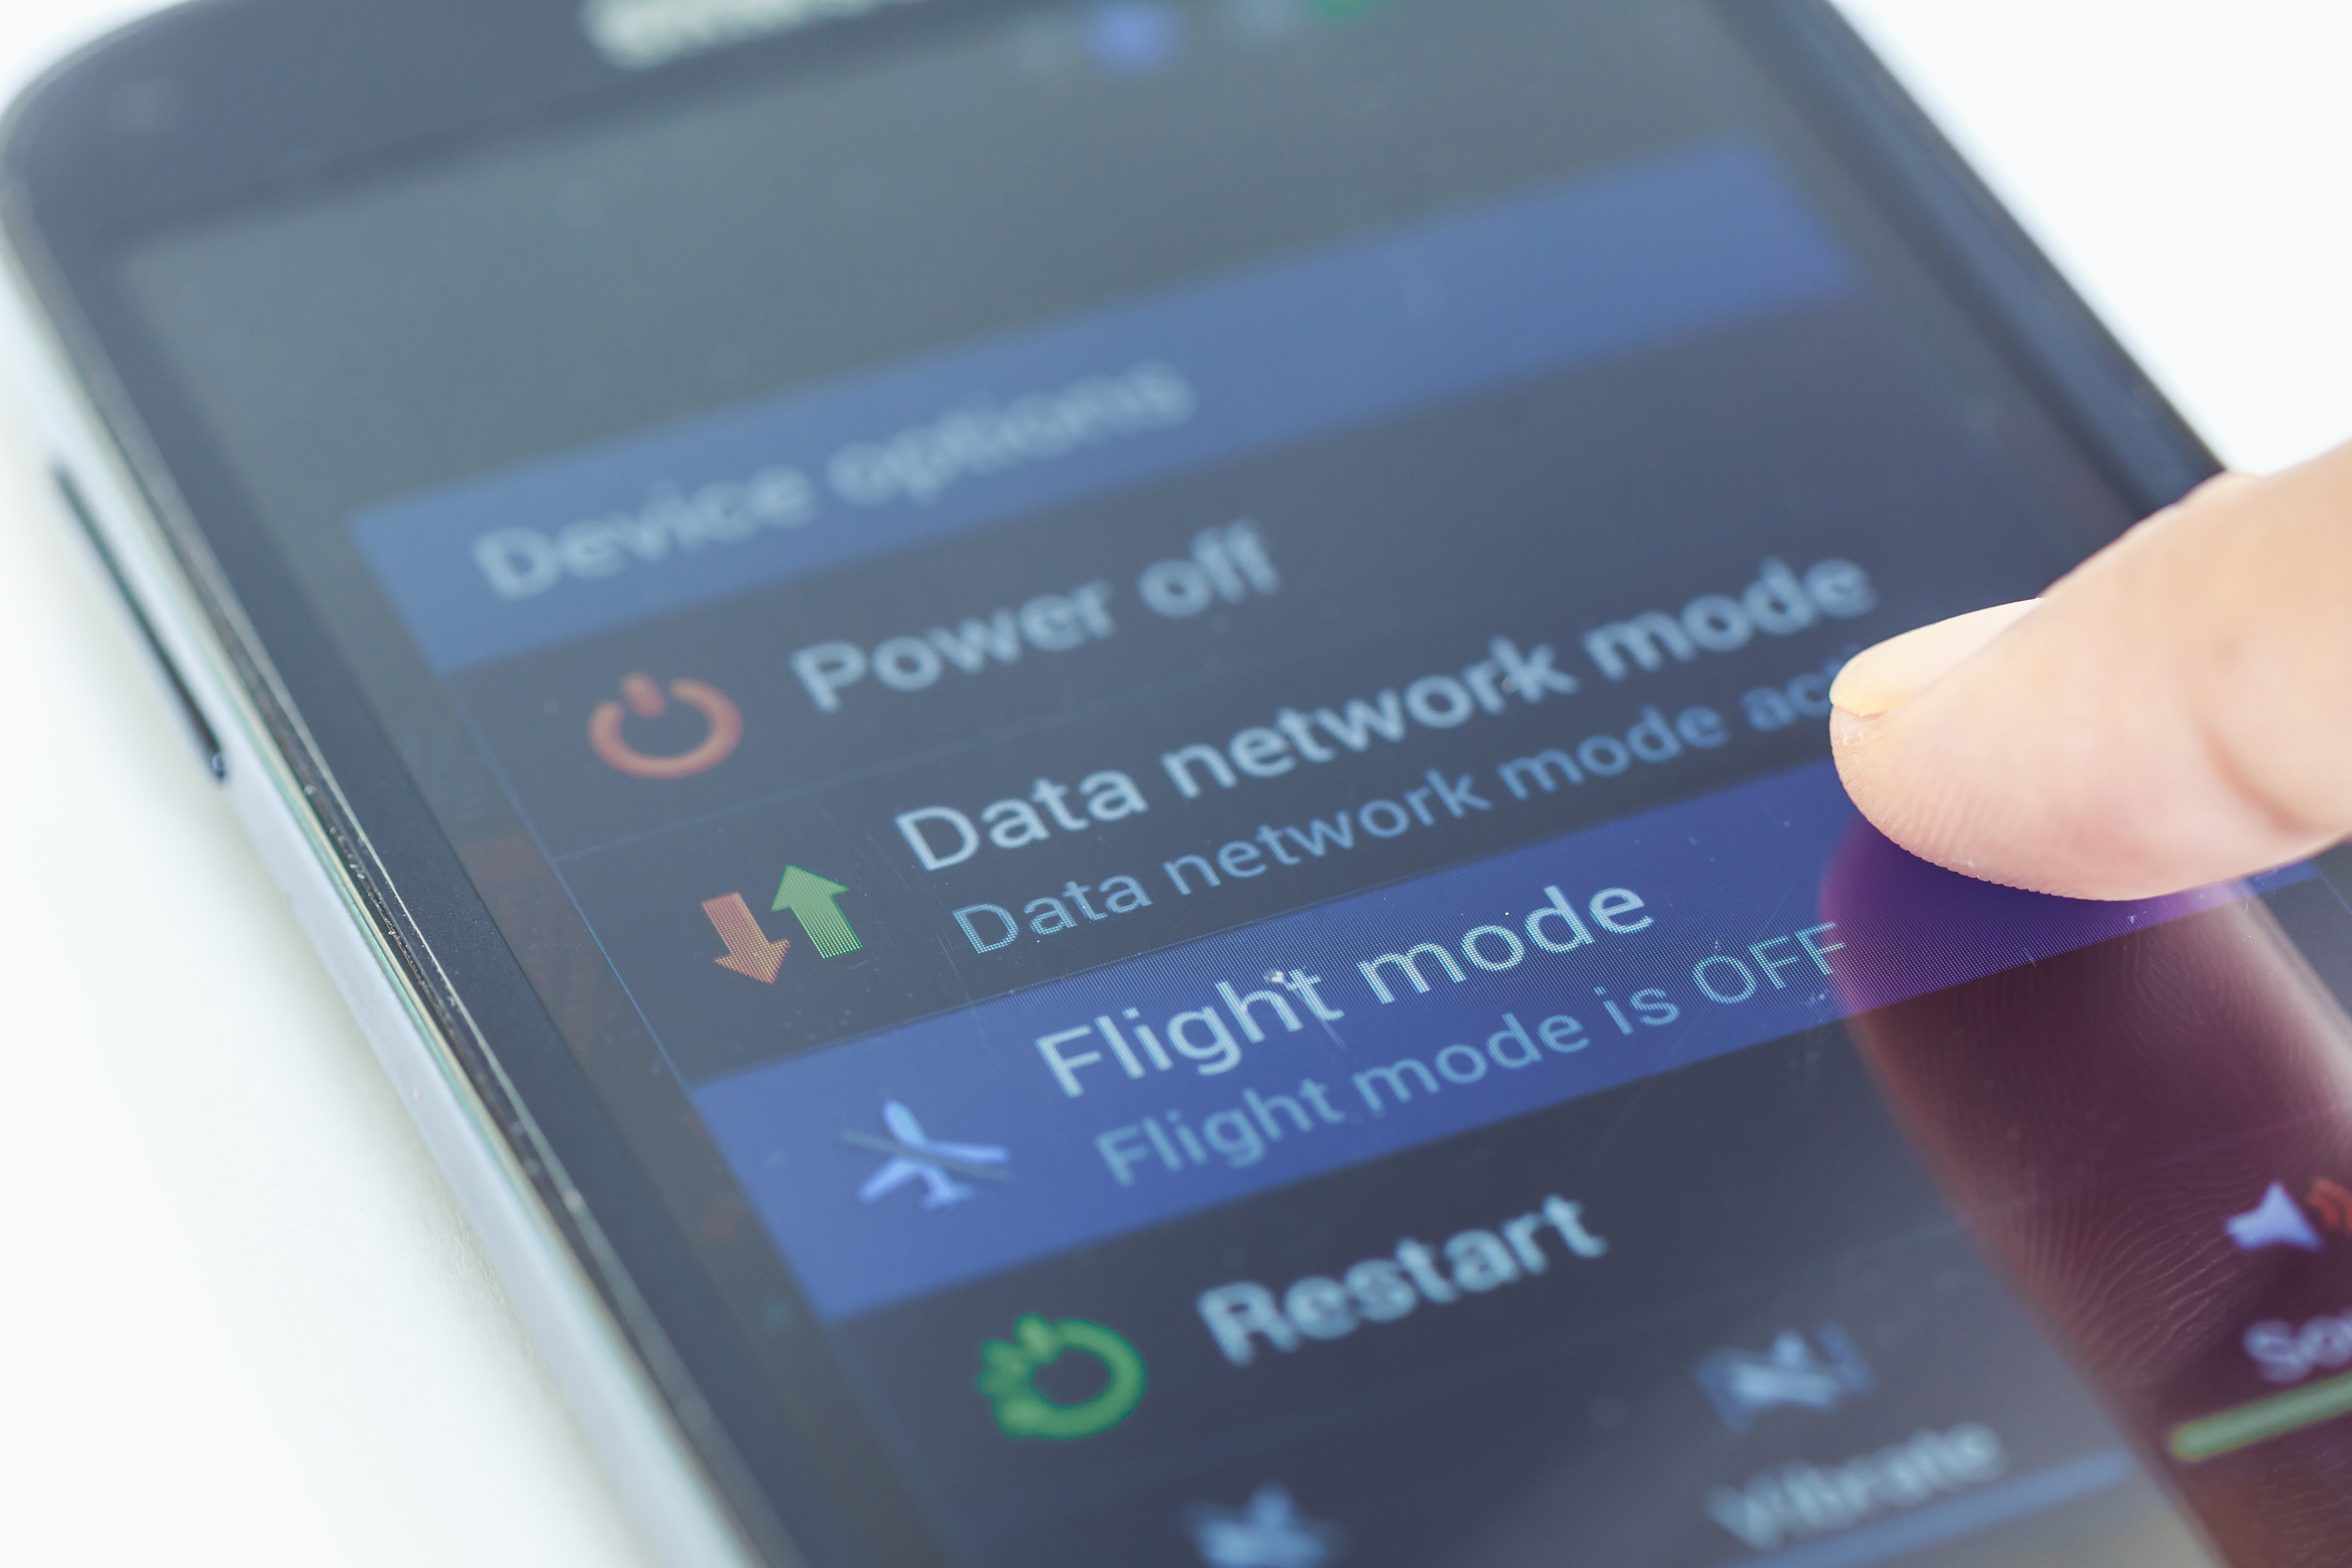 What is Flight mode in Samsung Galaxy Smartphones?